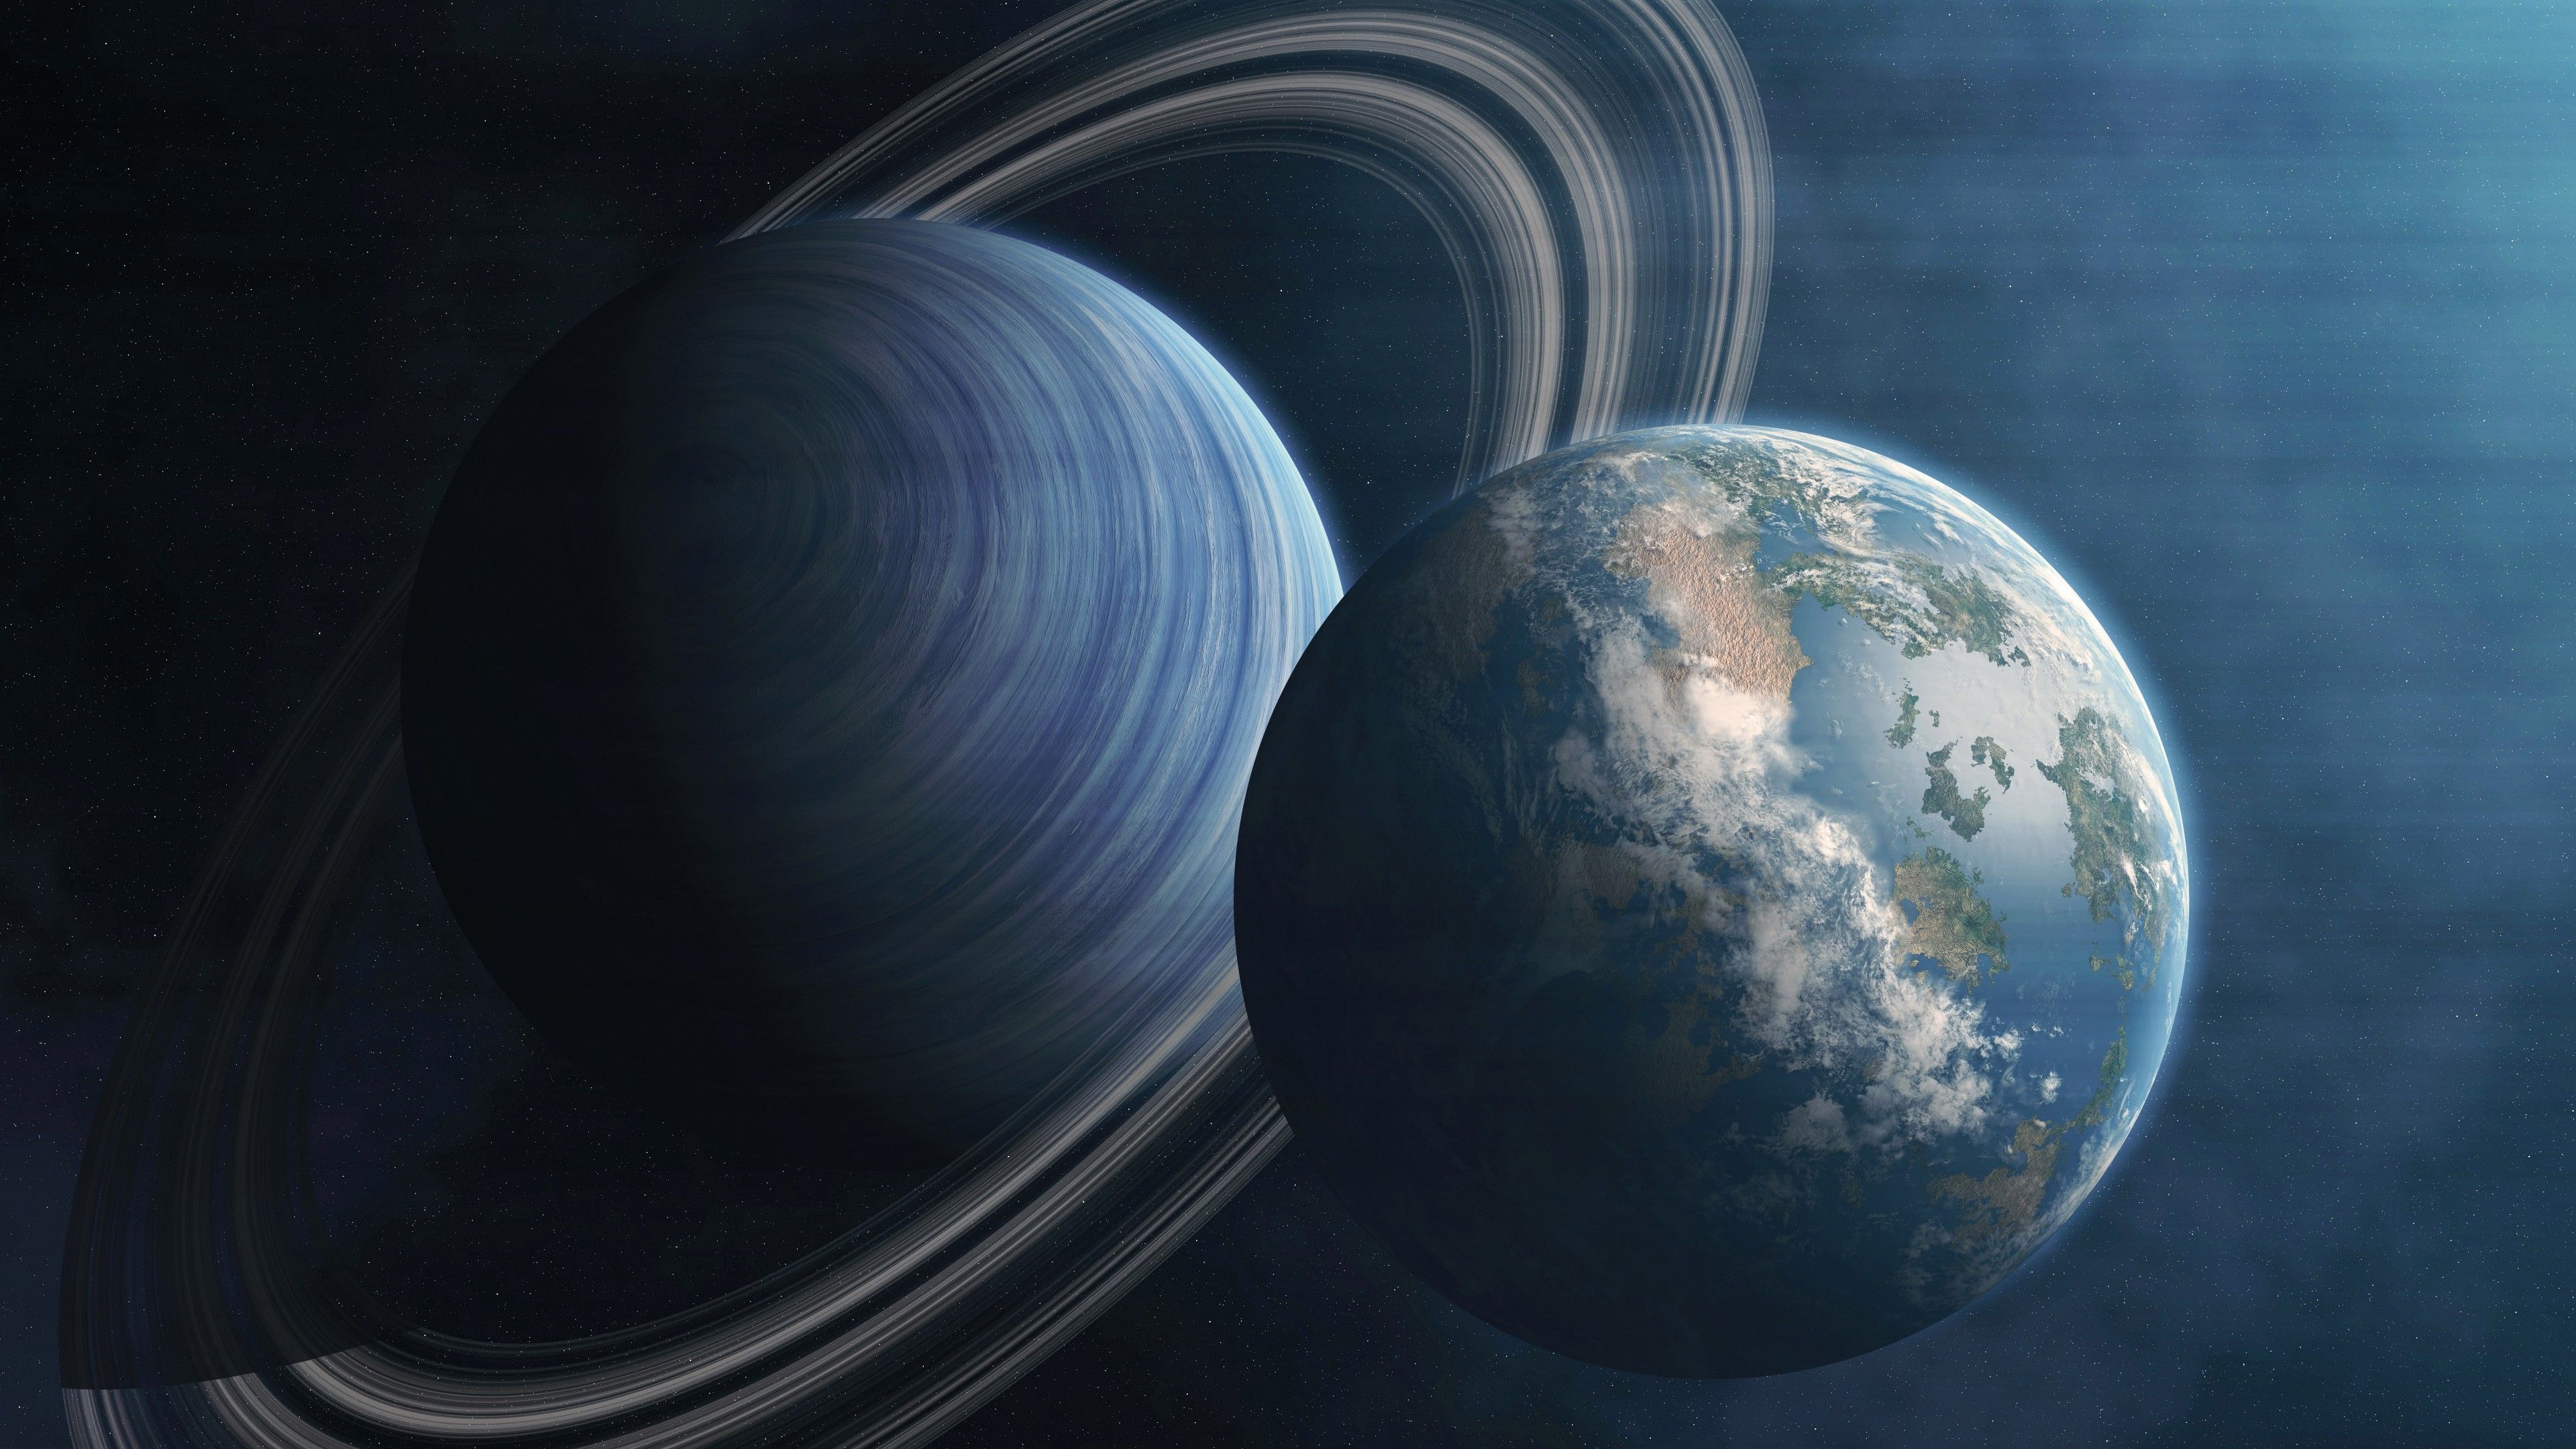 3840x2160 Wallpaper Planets Rings Earth 4k 8k Space